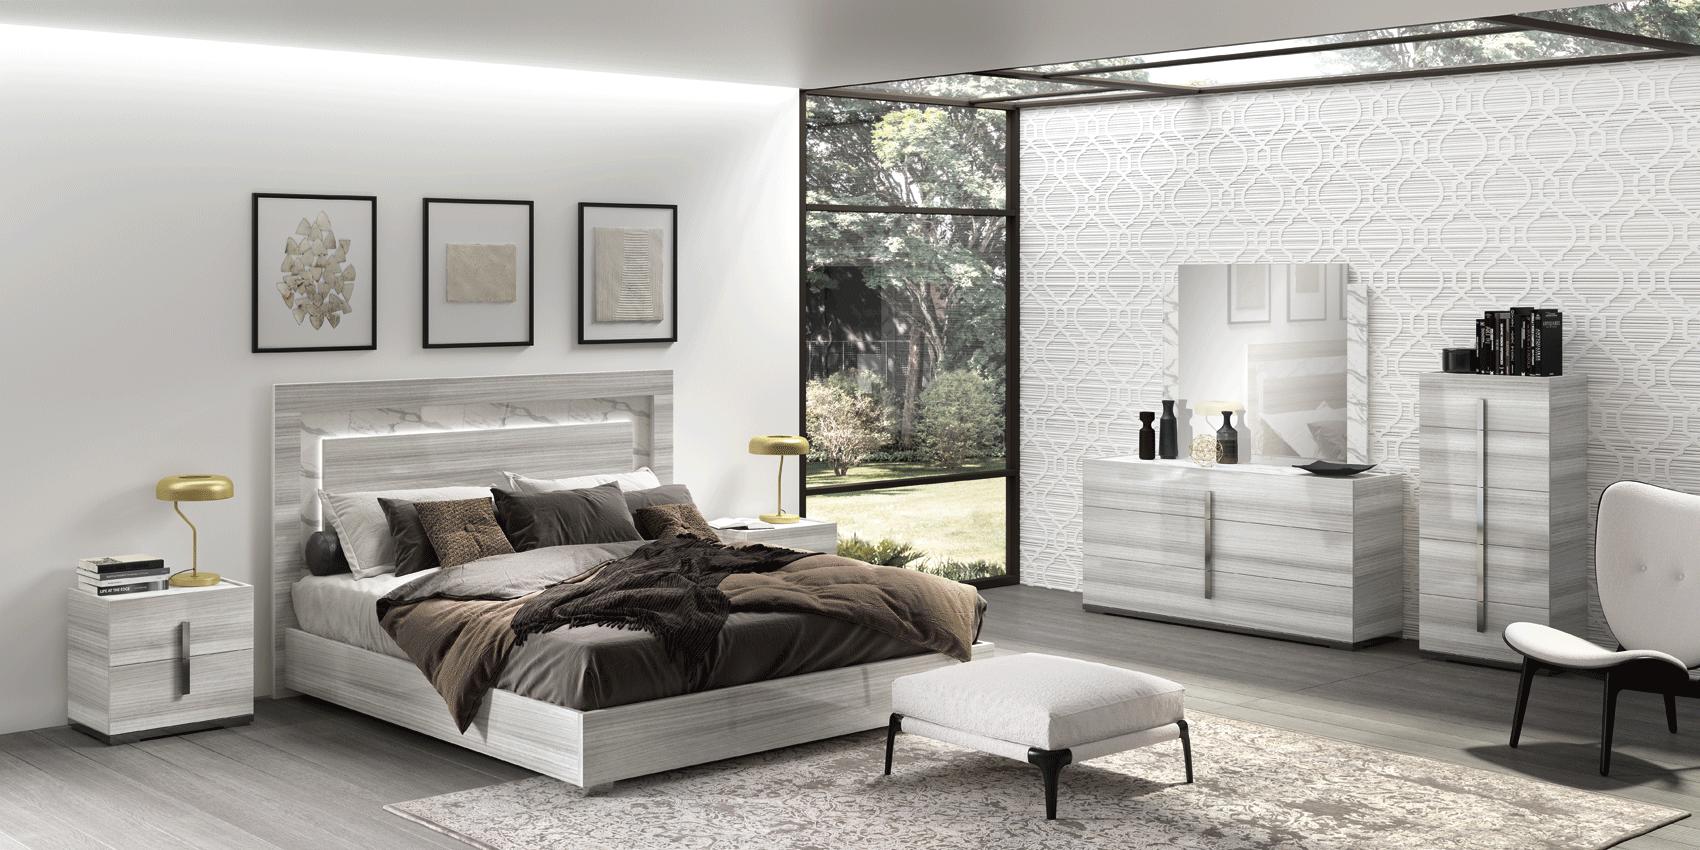 Contemporary, Modern Platform Bedroom Set CARRARABEDQSGREY CARRARABEDQSGREY-2NDM-5PC in Gray 